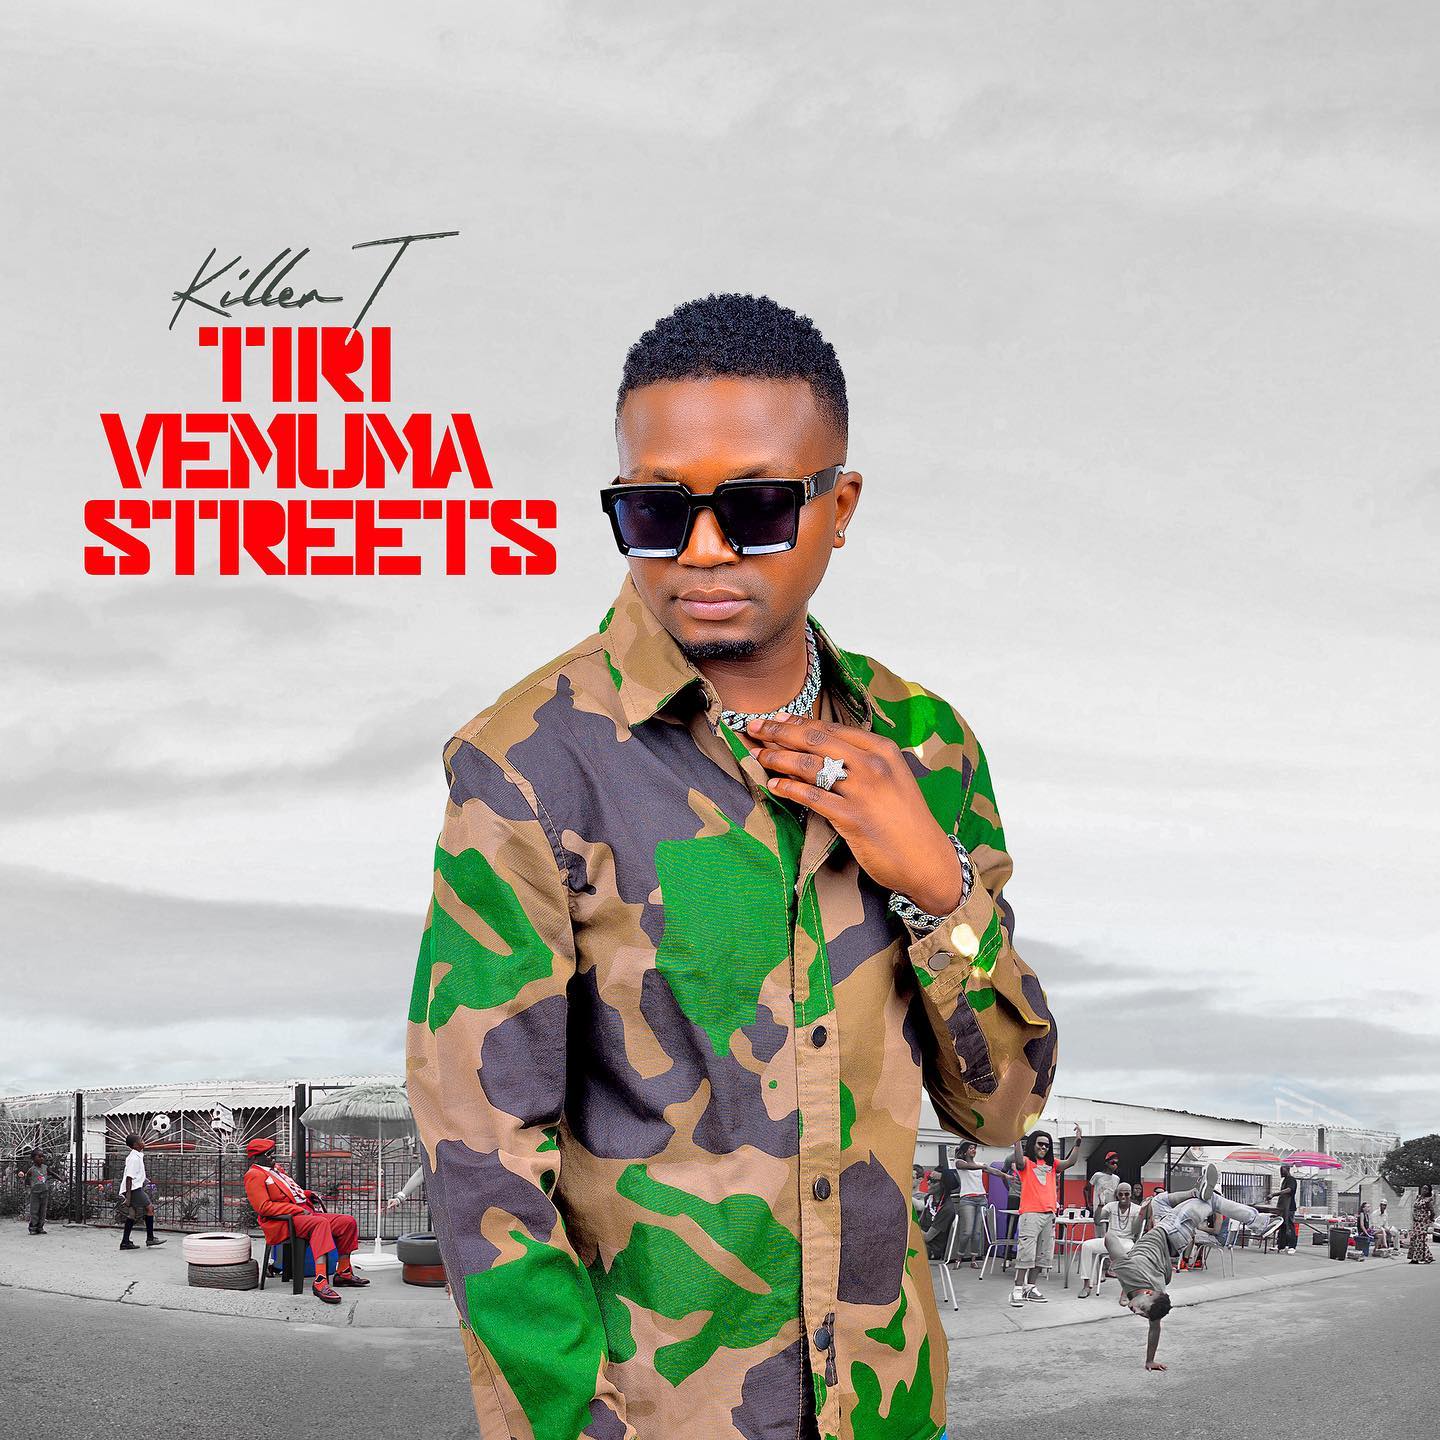 Killer T releases new album 'tirivemuma streets'